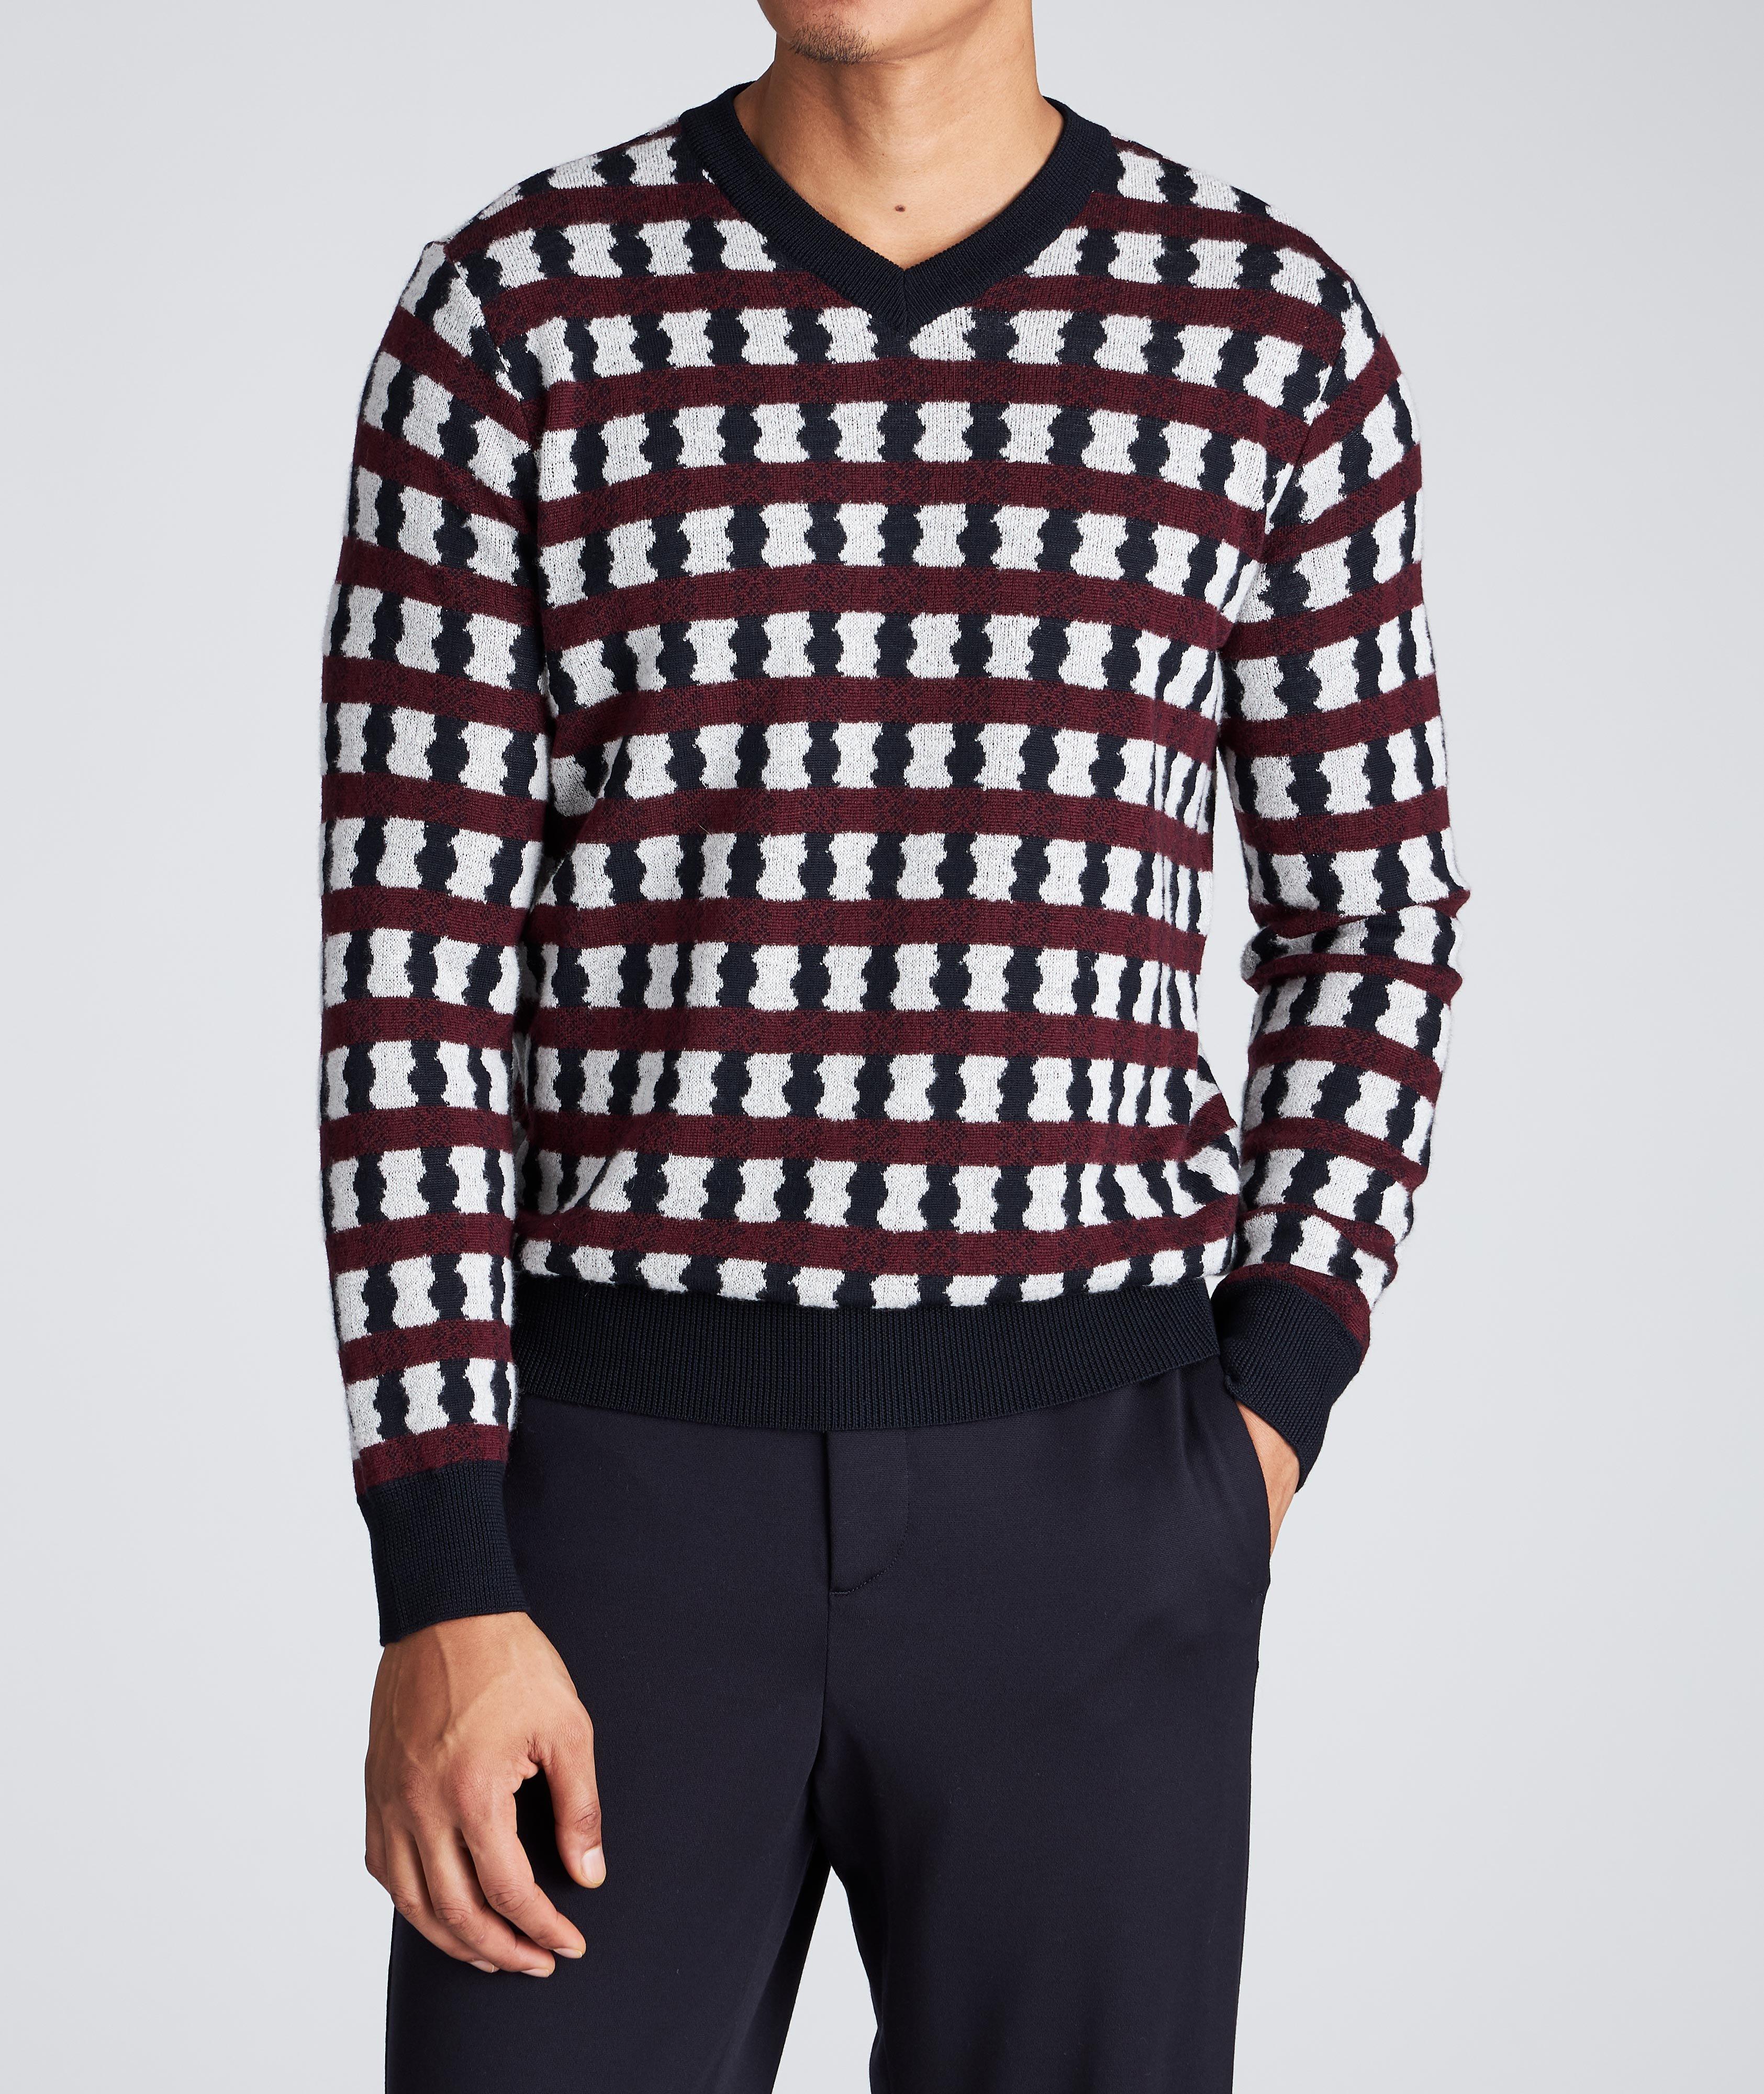 Geometric Print Wool, Cashmere & Silk Sweater image 1